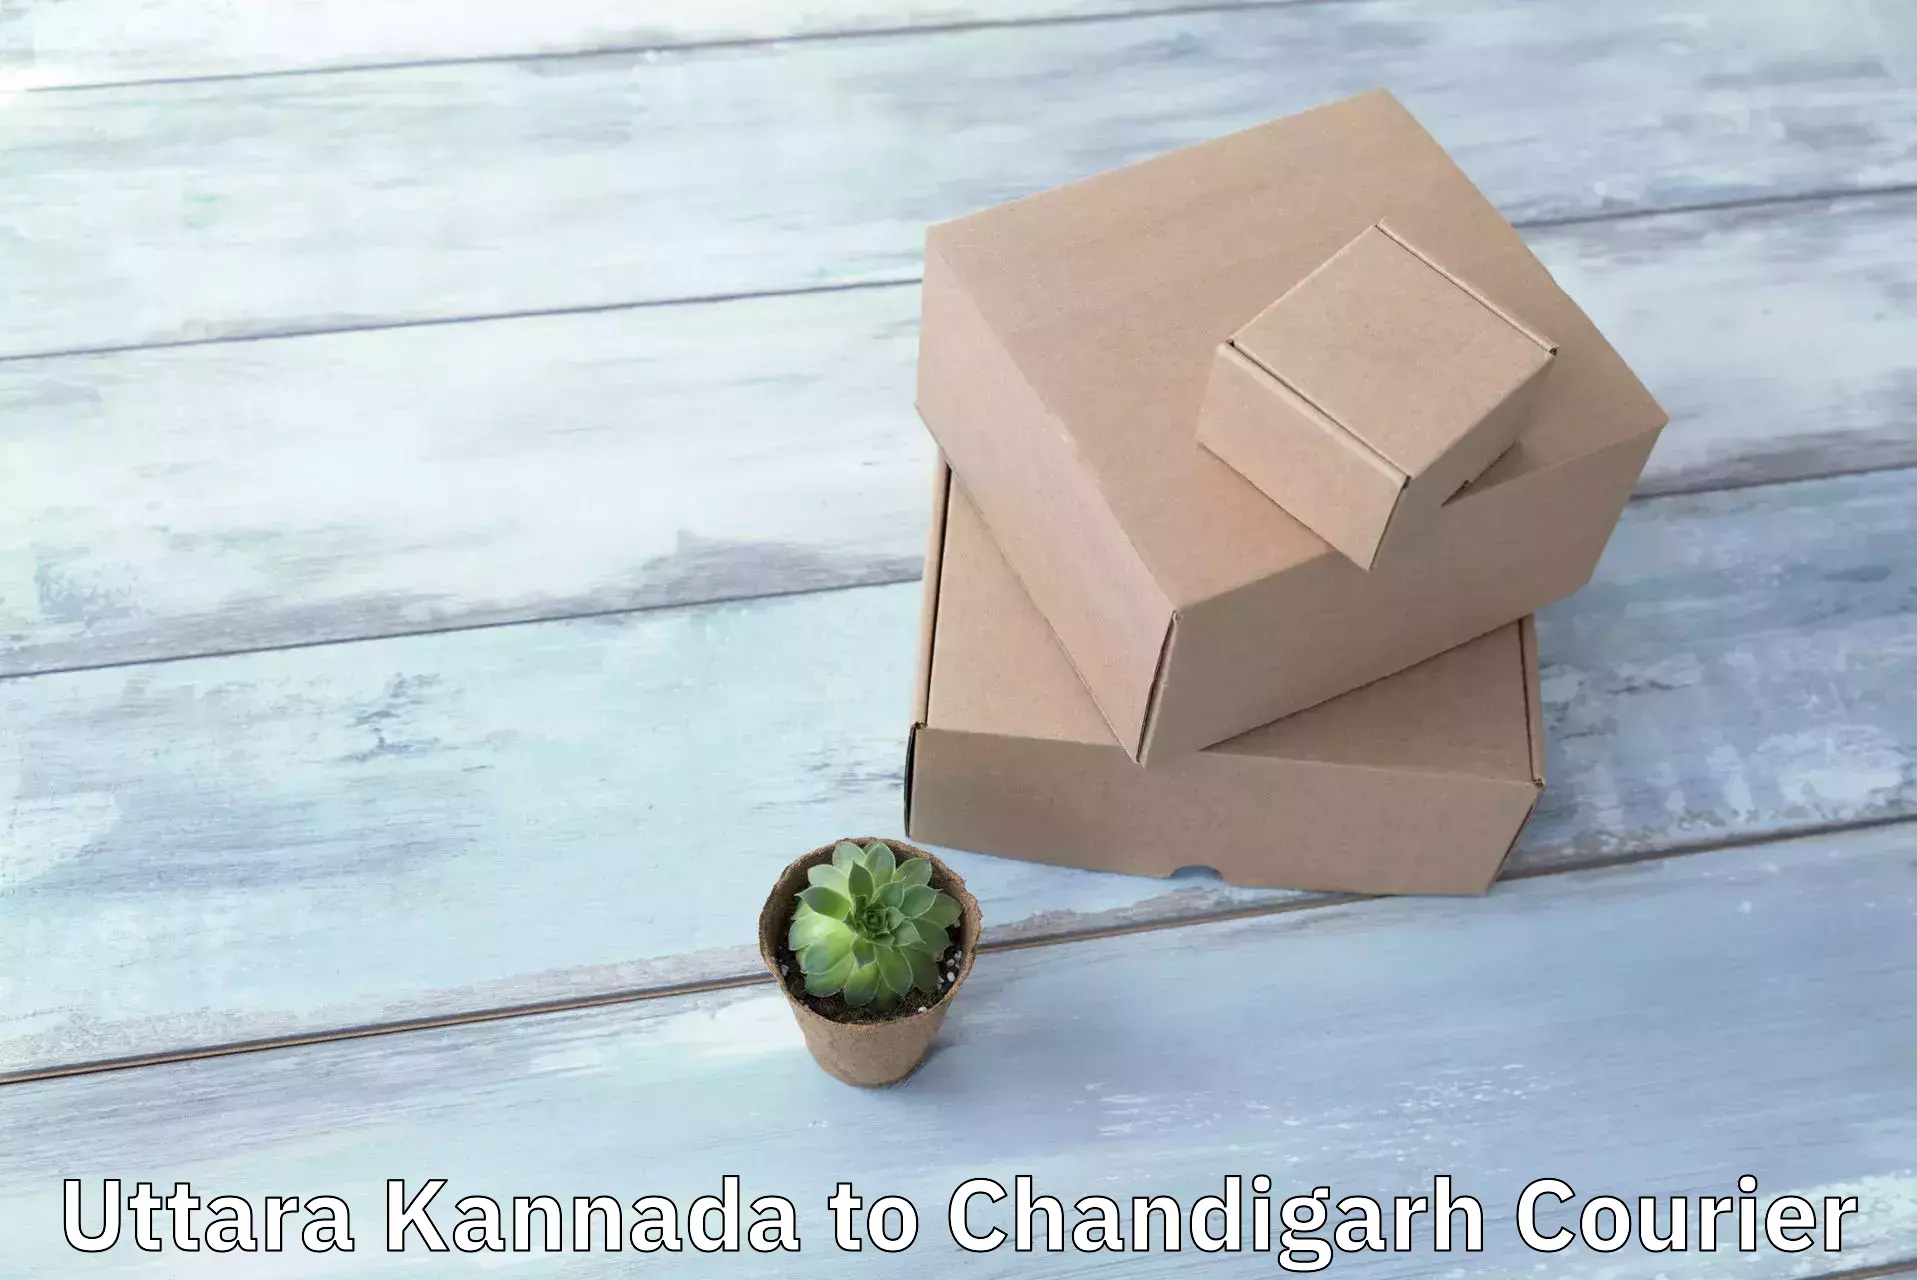 Courier service innovation Uttara Kannada to Chandigarh